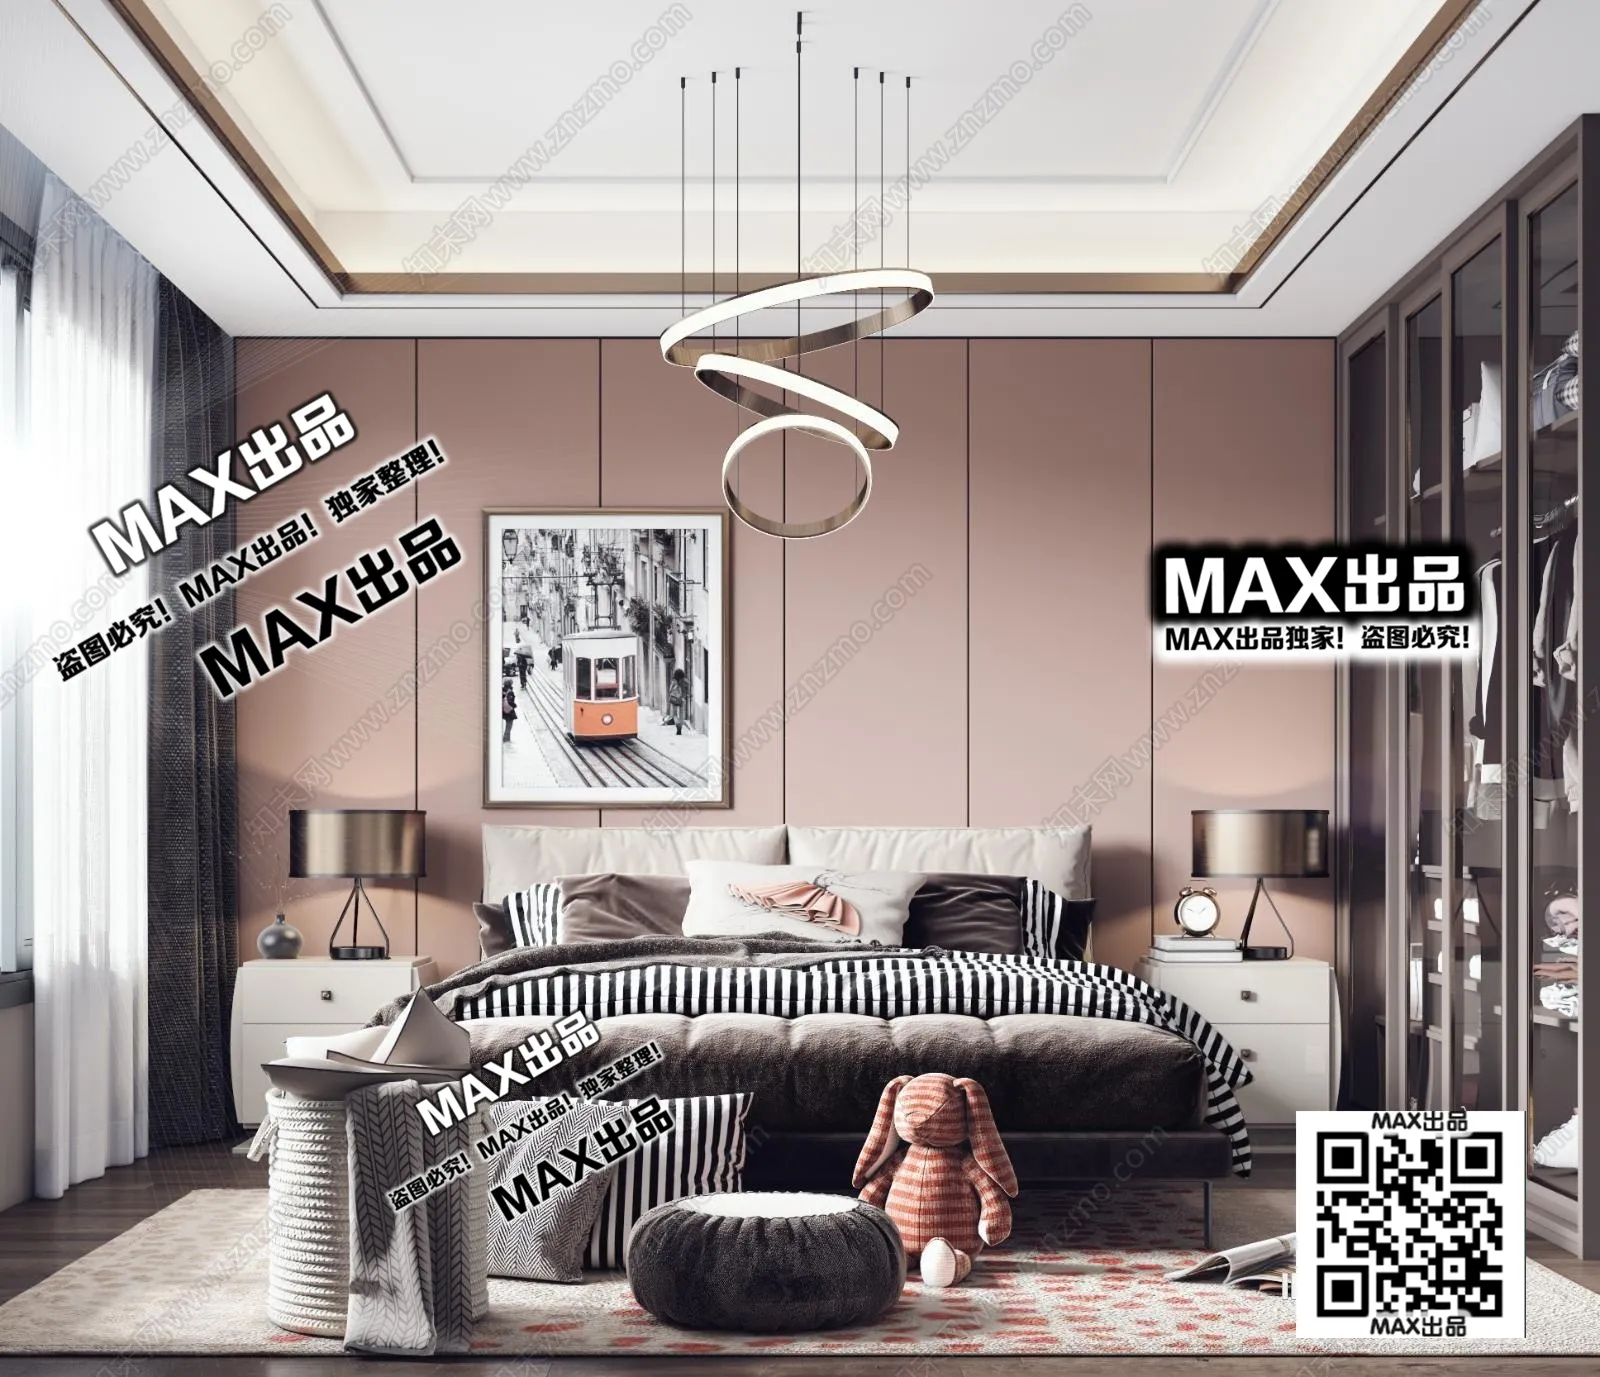 3DS MAX SCENES – LIVING ROOM – 038